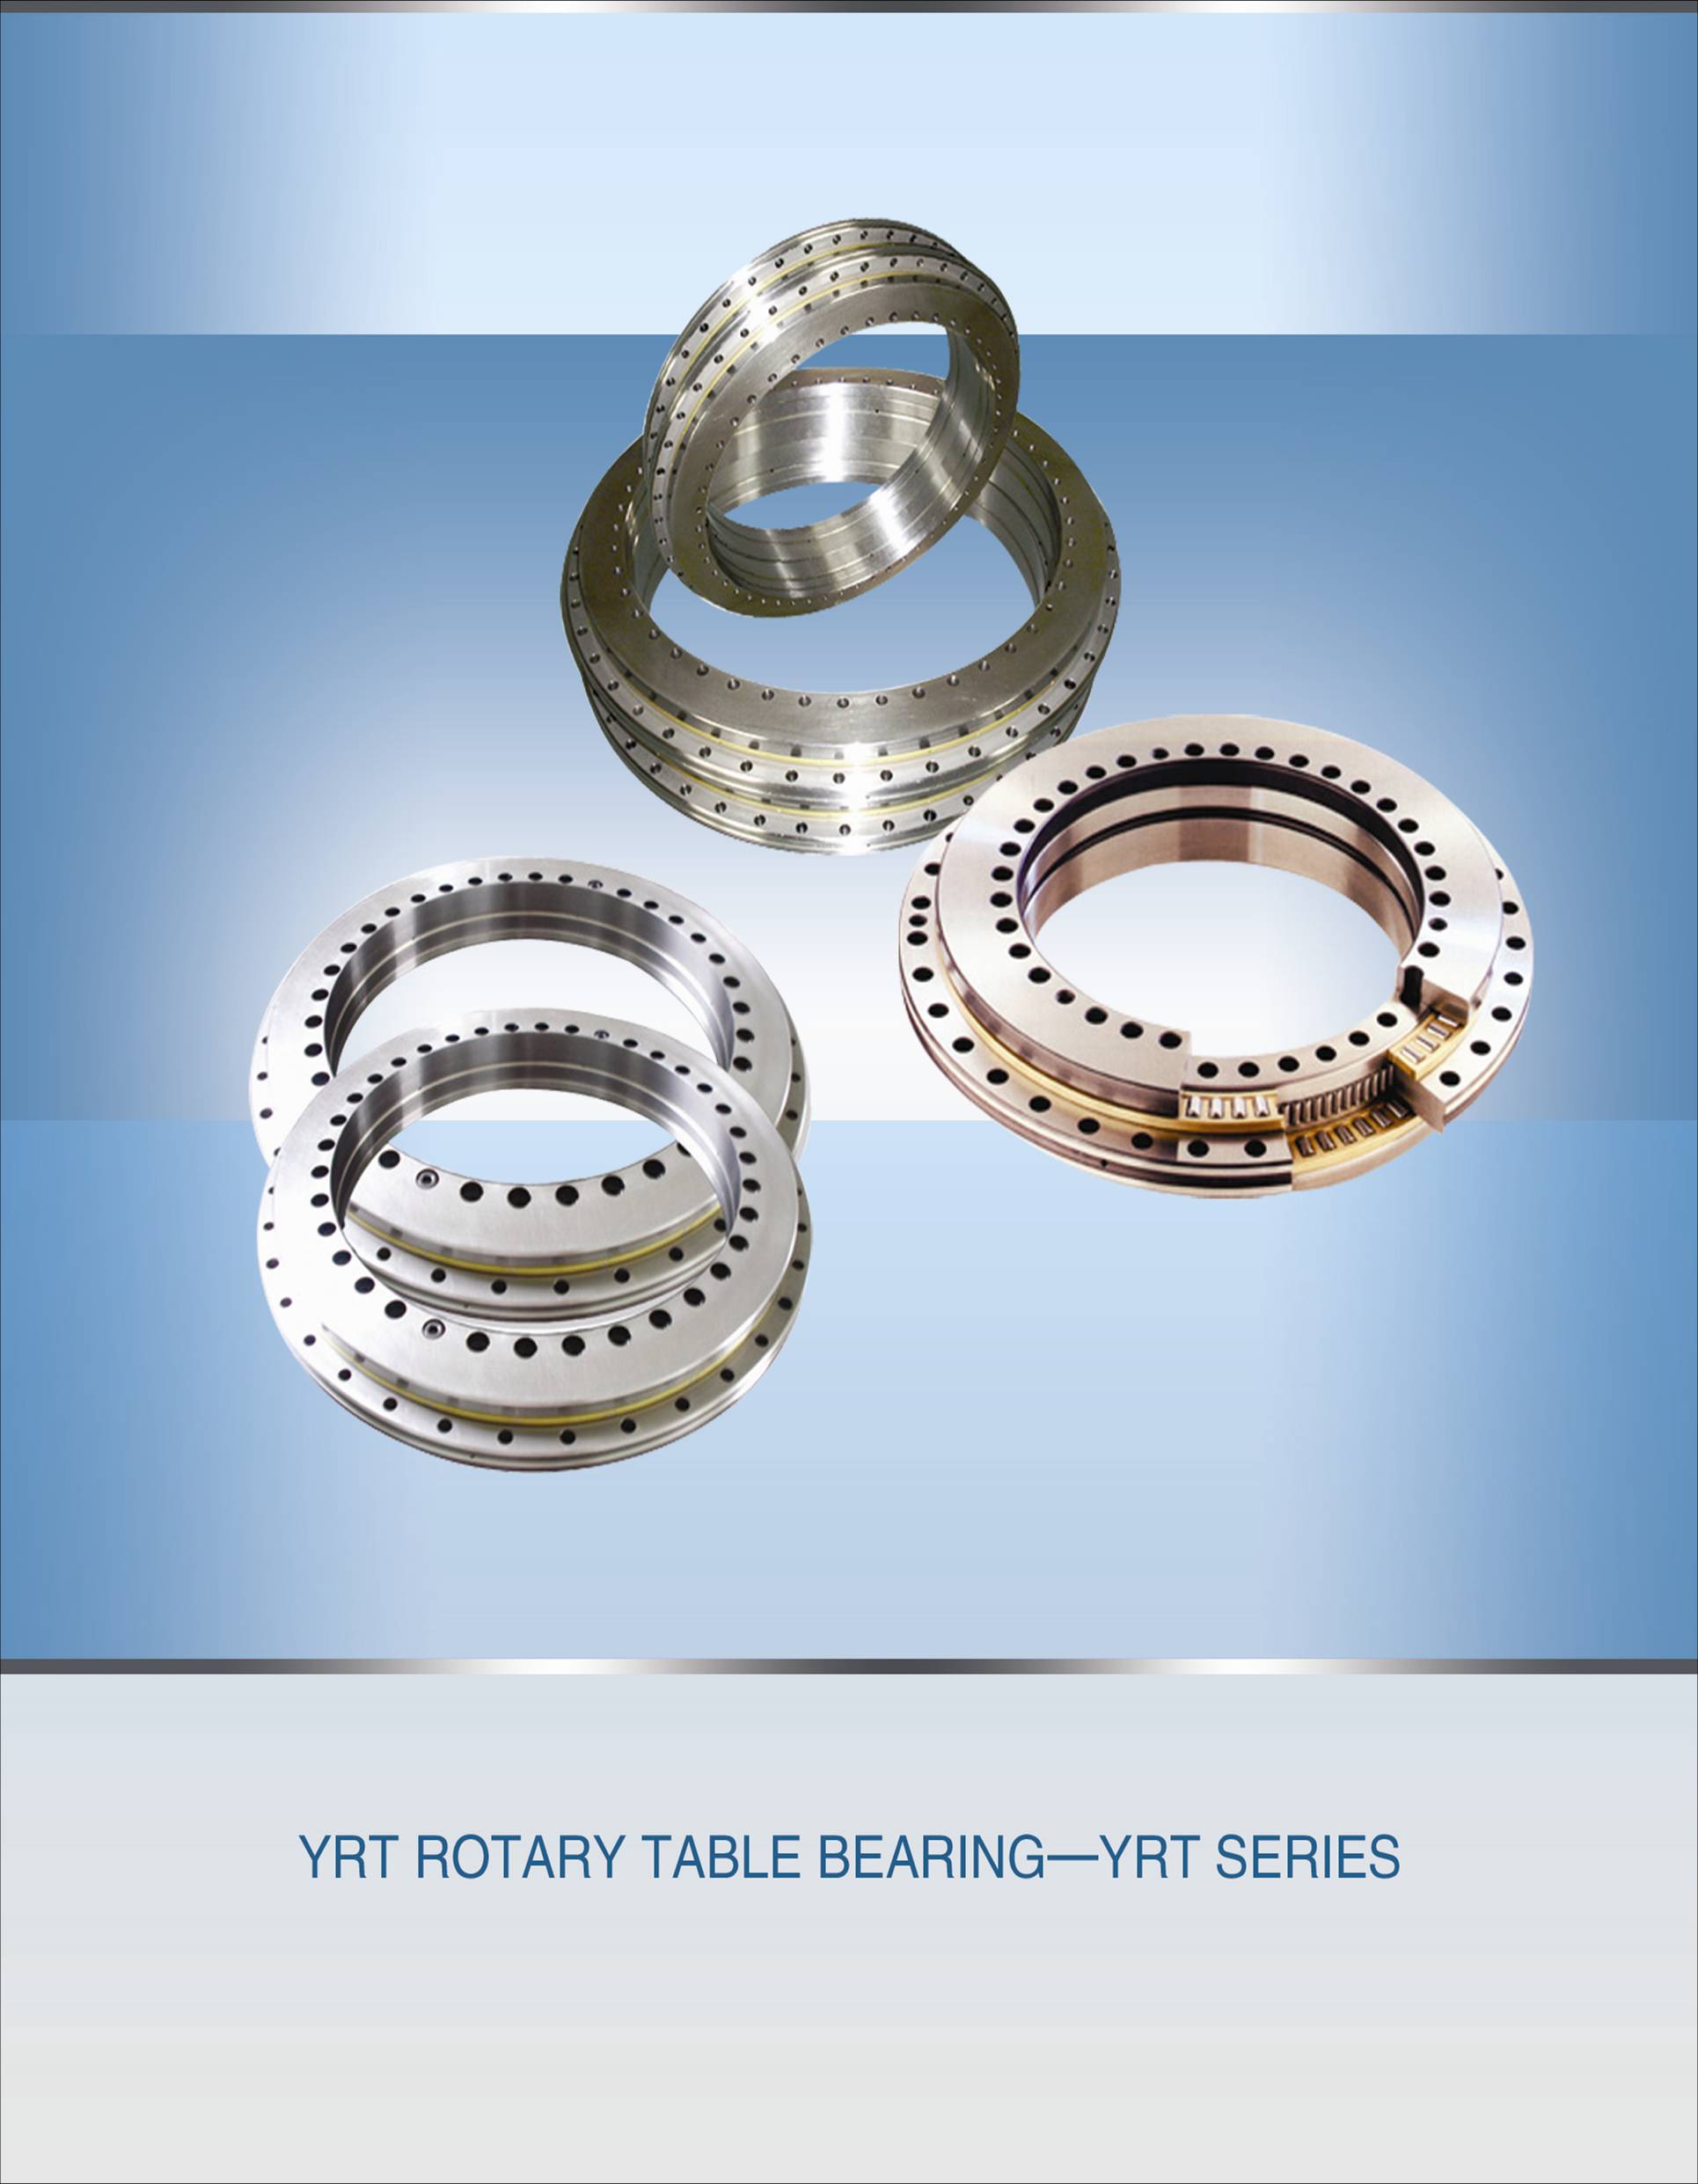 YRT rotary table bearing-YRT Series